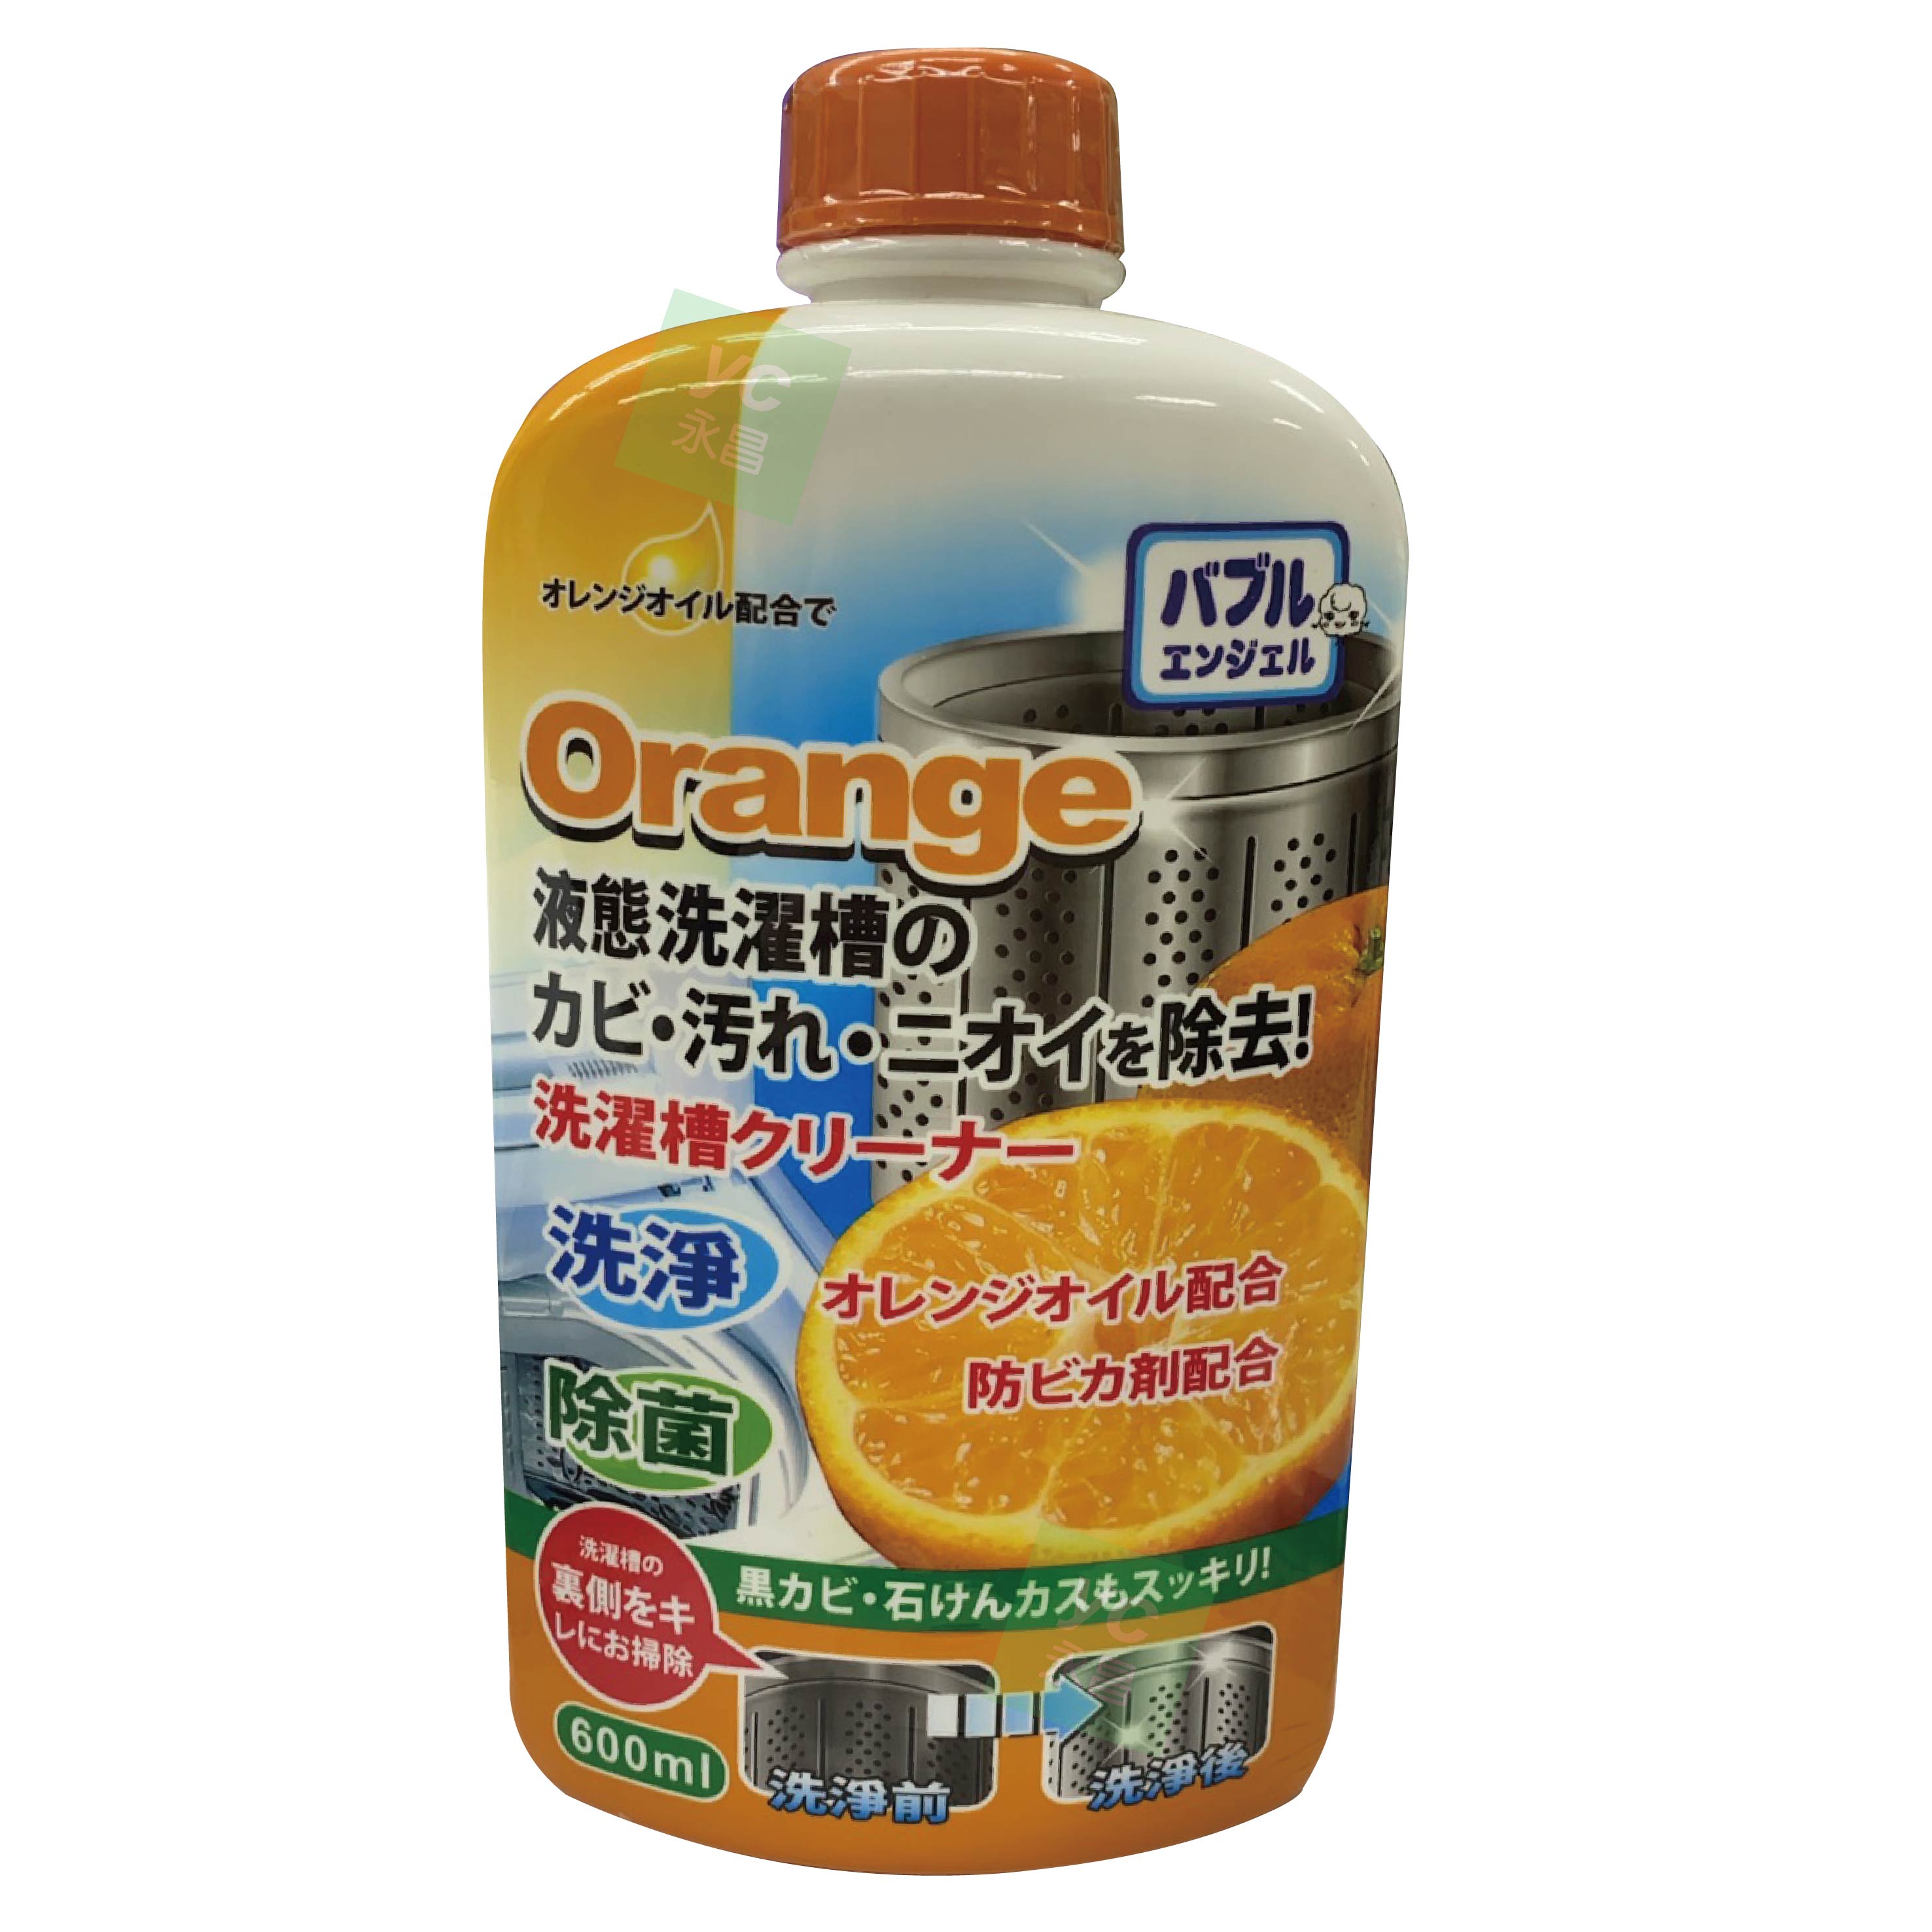 VU6 日本Orange橘油 液態 洗衣槽 專用 清洗劑 / 瓶 4560364218405